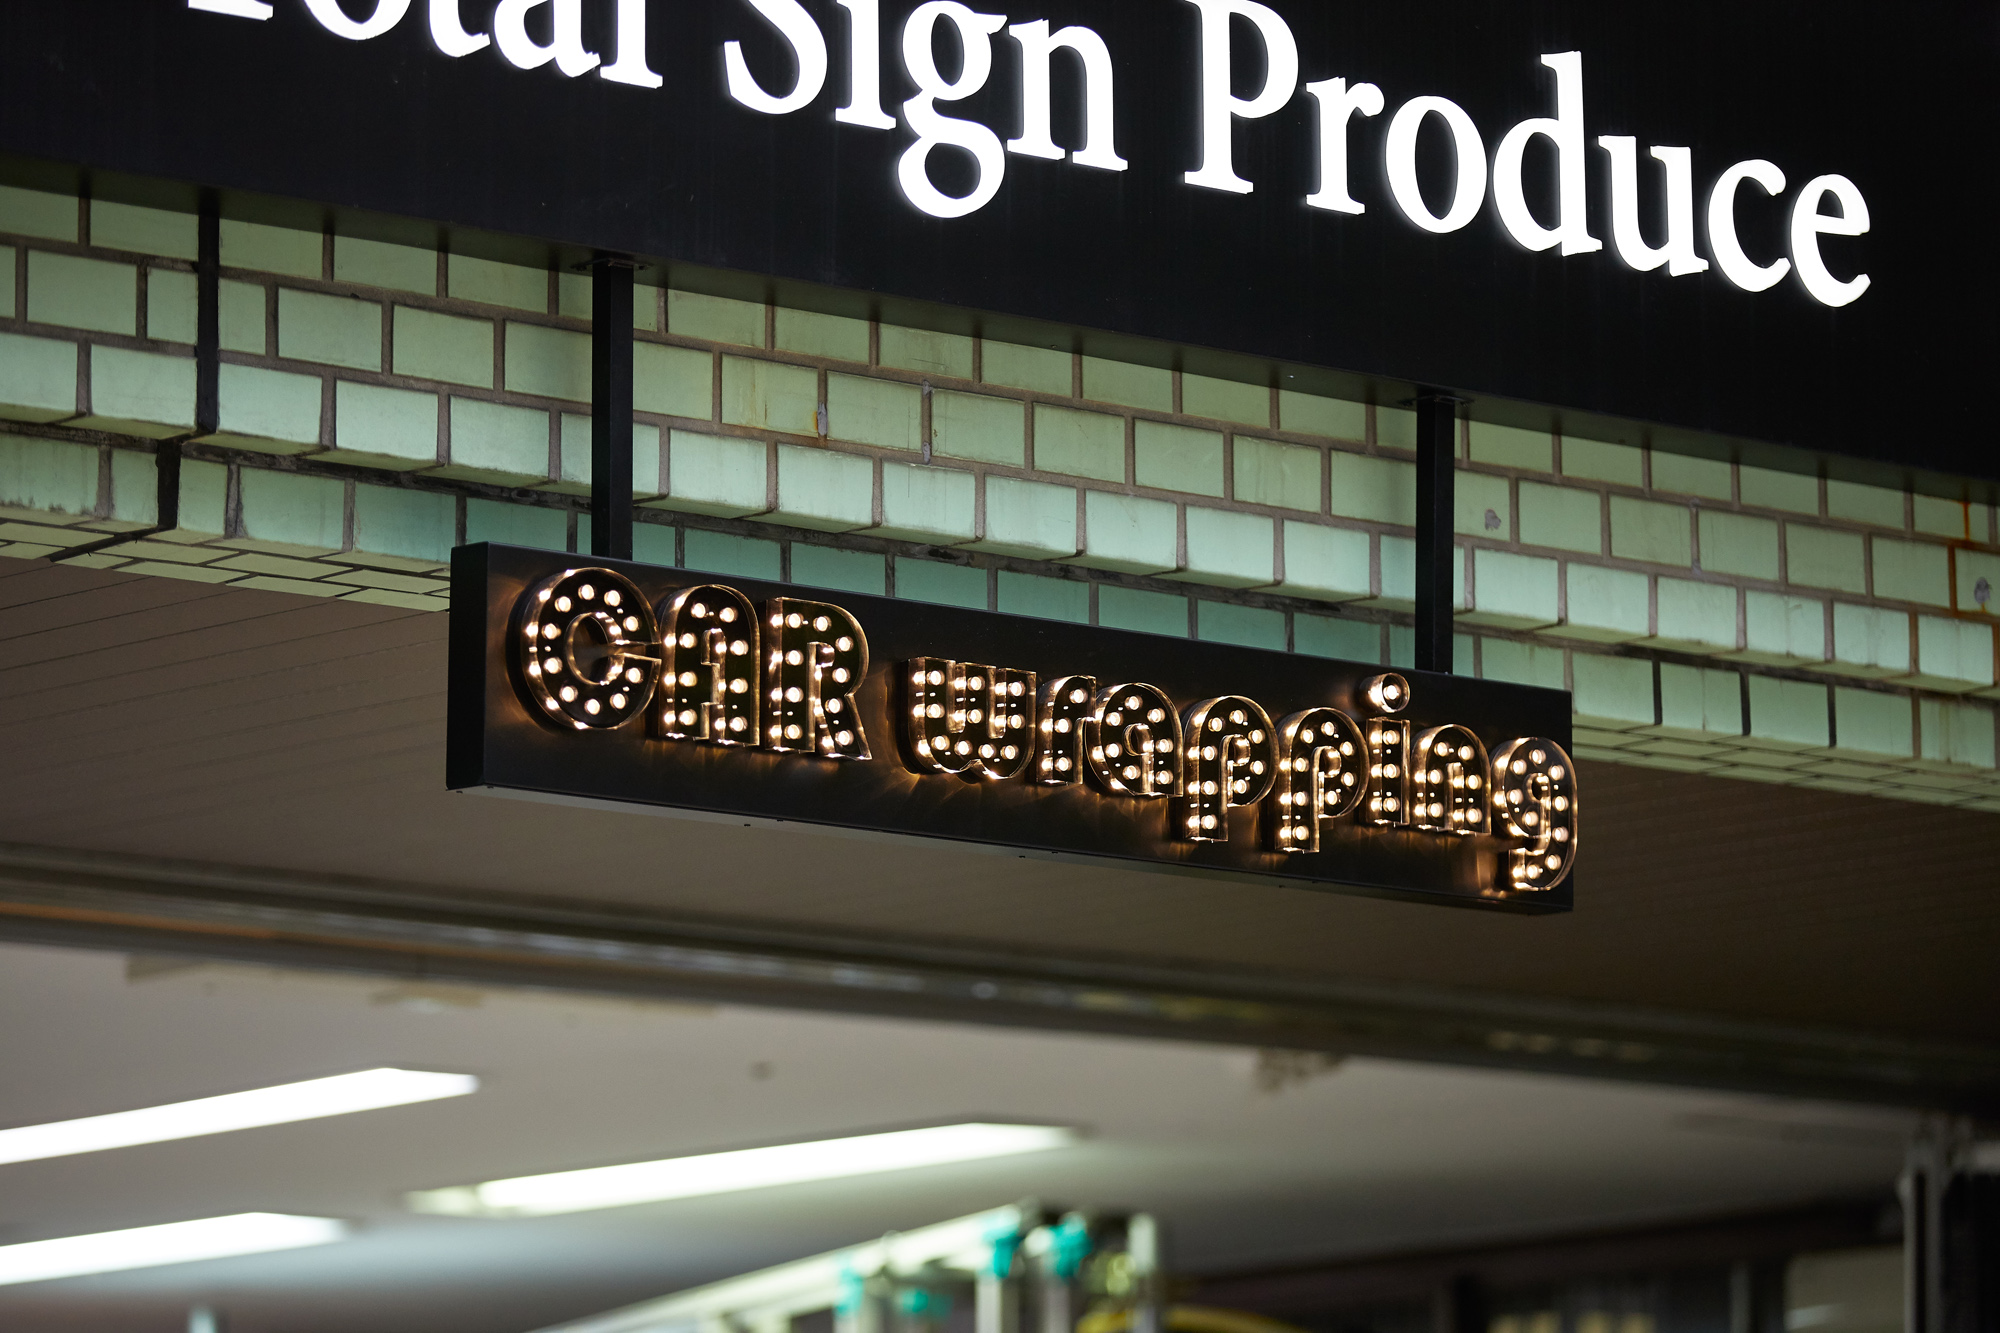 LEDサイン、LED看板のDIGITEC SIGN PRO DIAの施工事例、T-art 外壁サイン